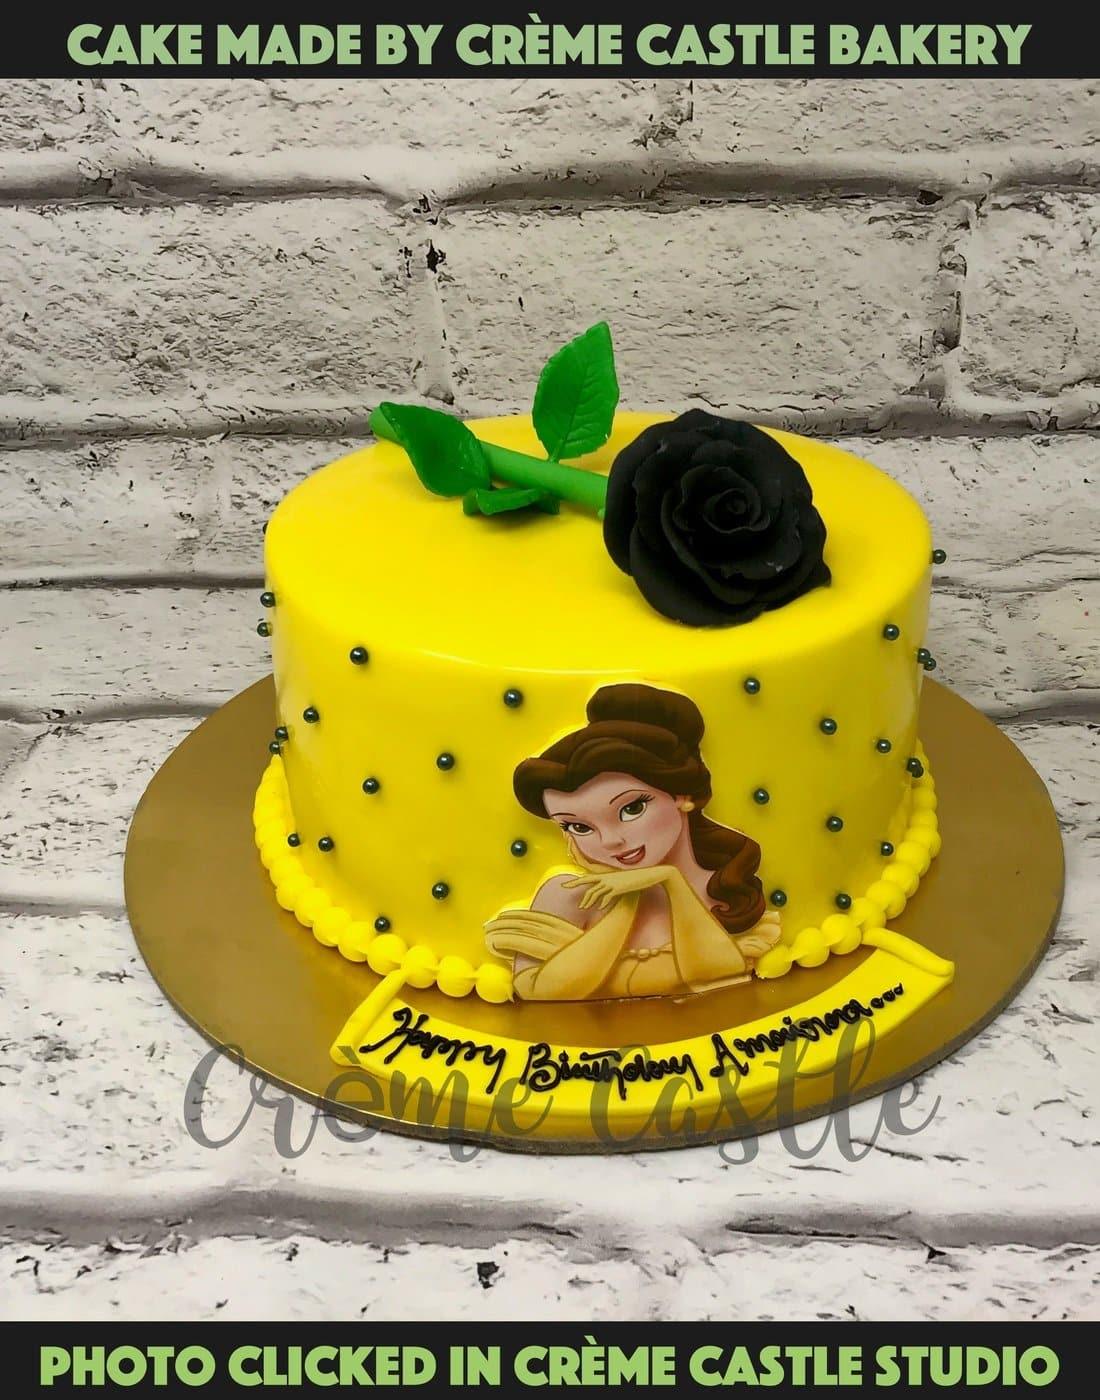 Snow White Theme Cake by Creme Castle